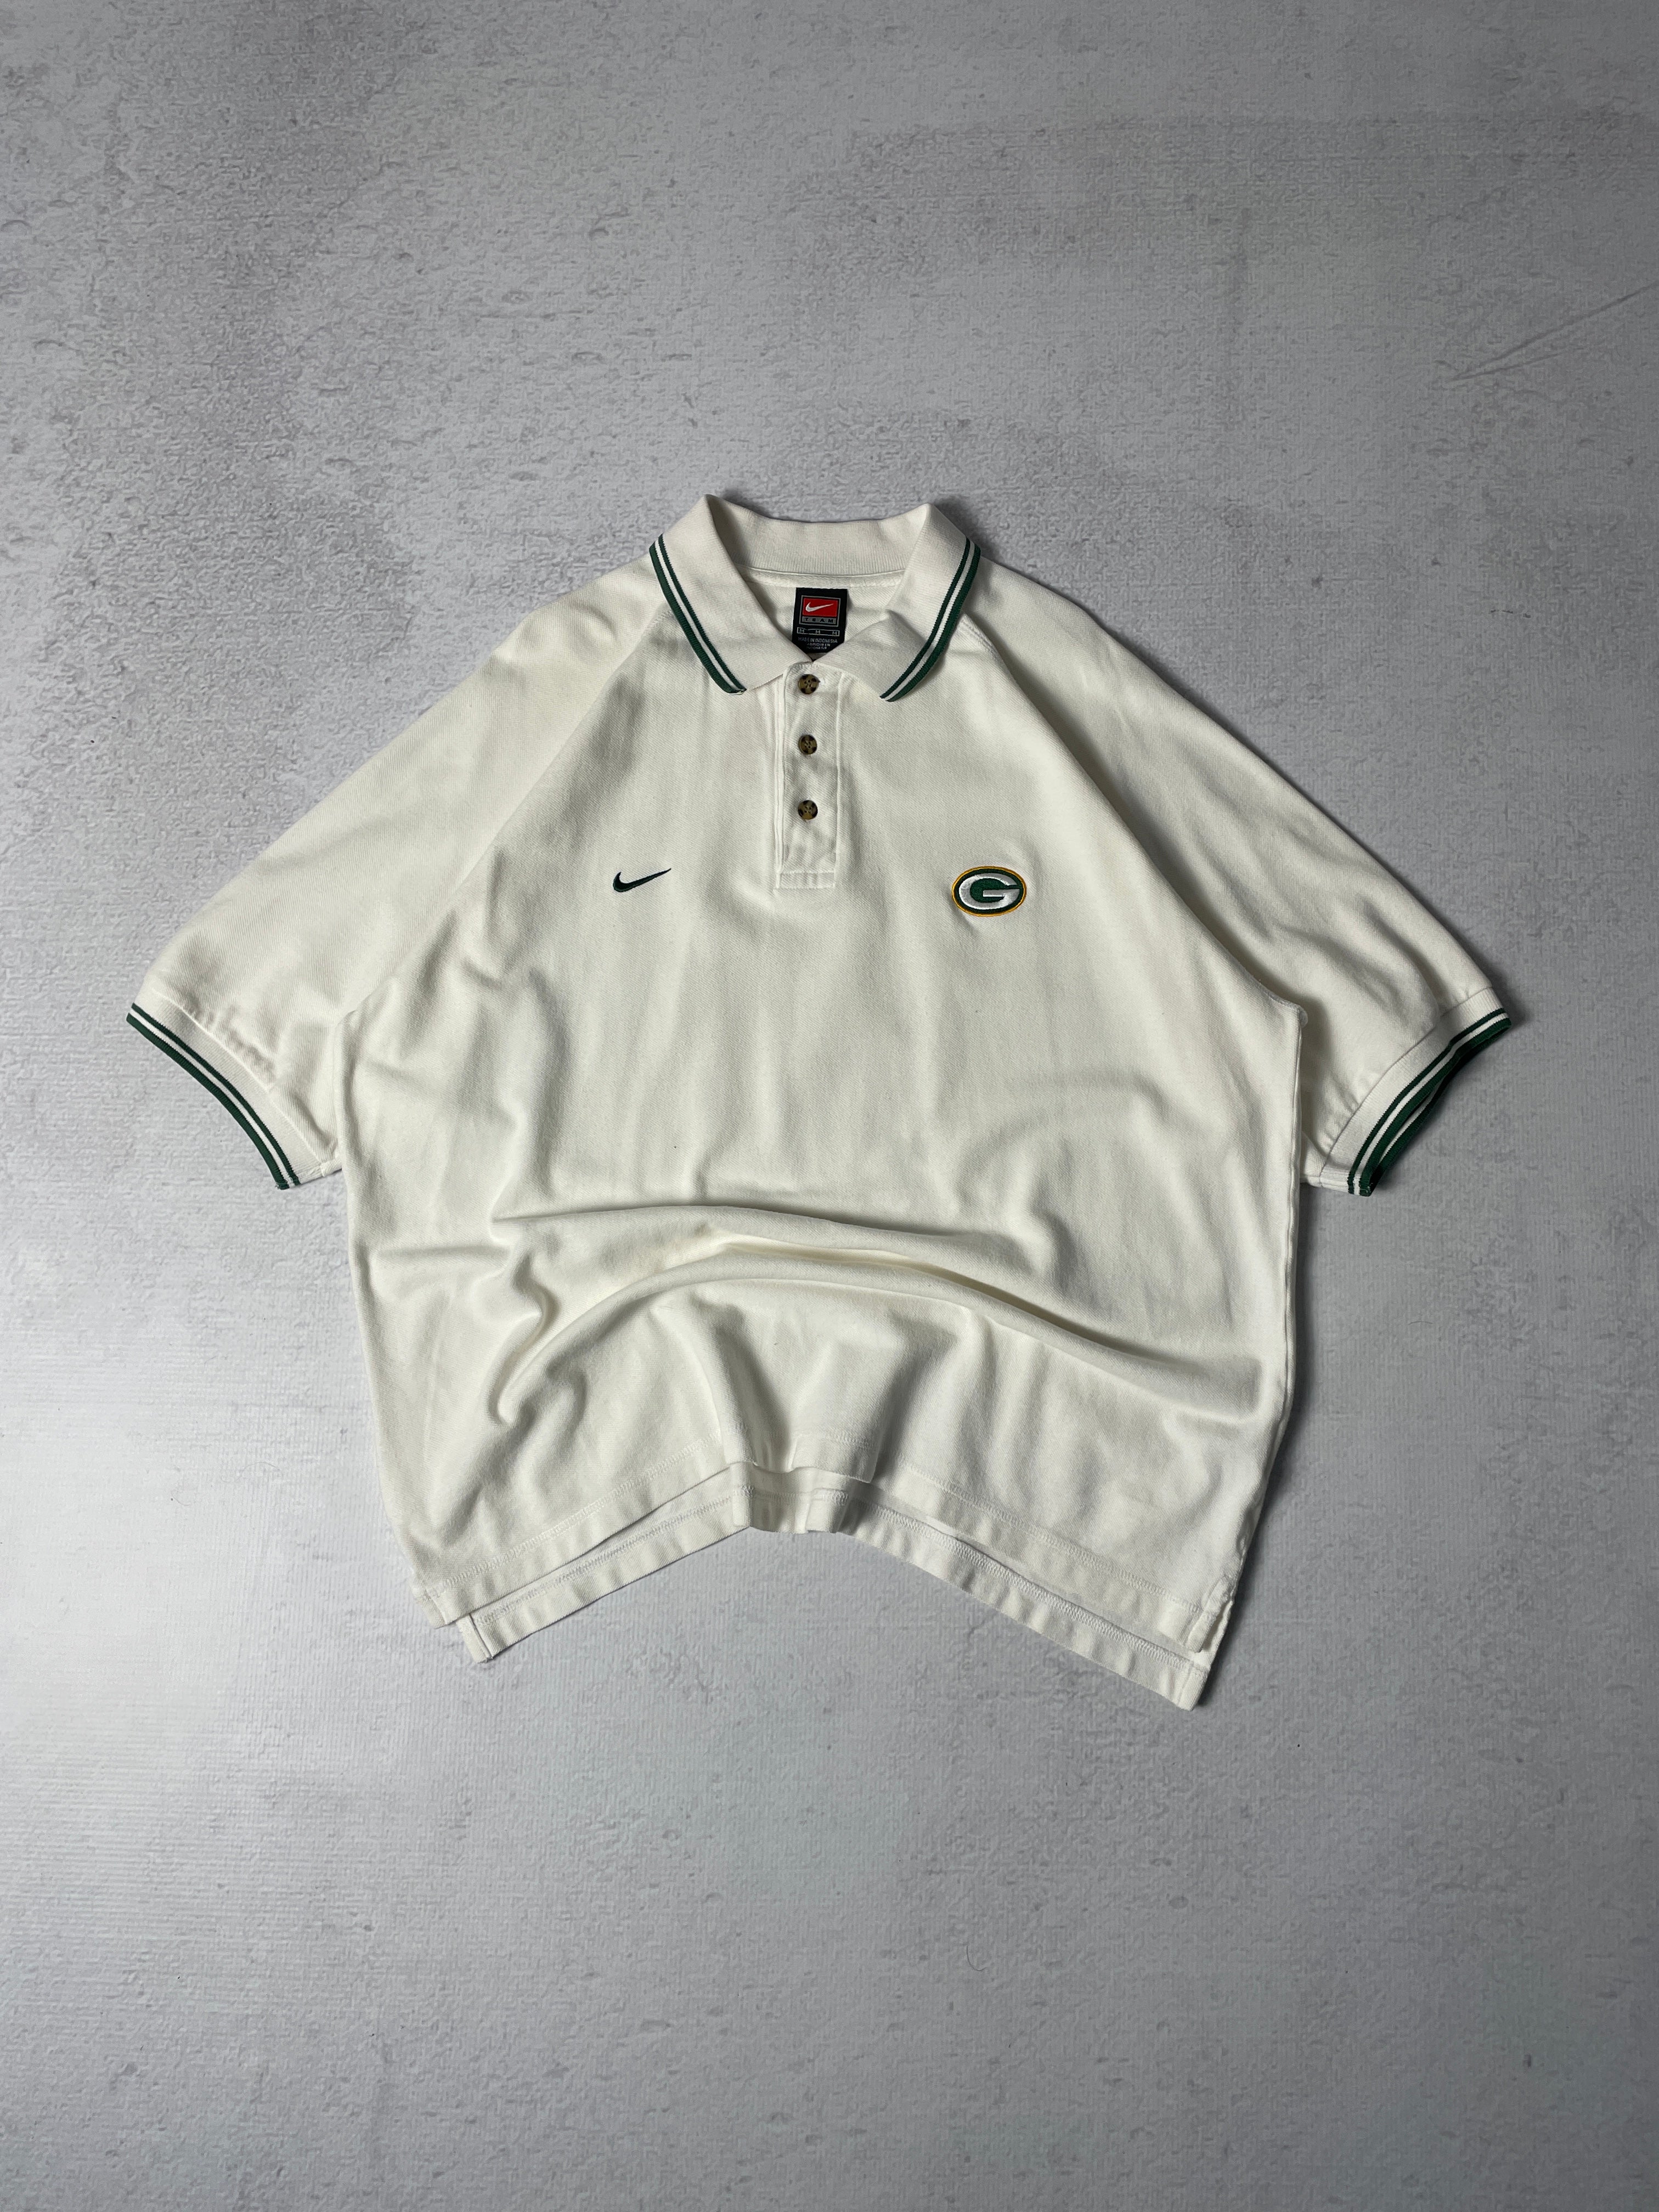 Vintage NFL Green Bay Packer Polo Shirt - Men's Medium